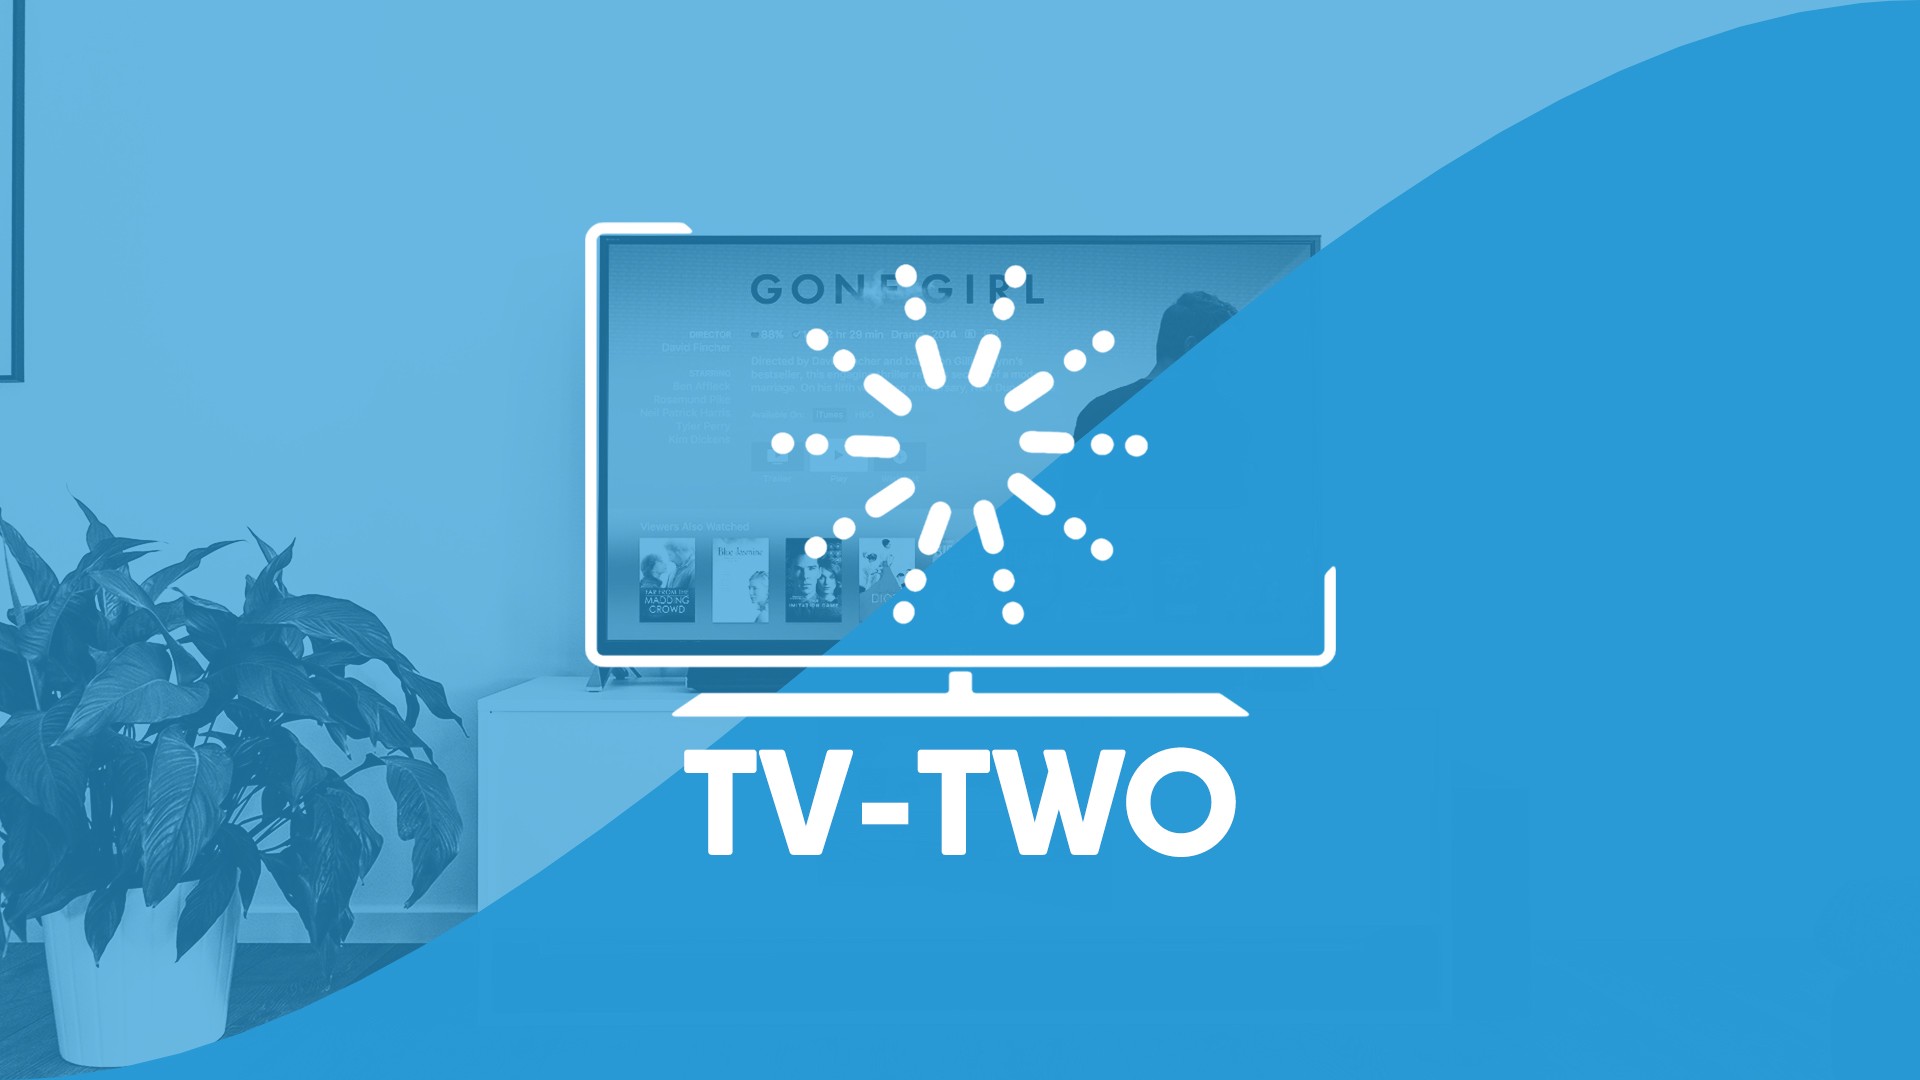 TV-TWO (ティーブイツー) 現在のテレビエコシステムを解決するための分散型ソリューション